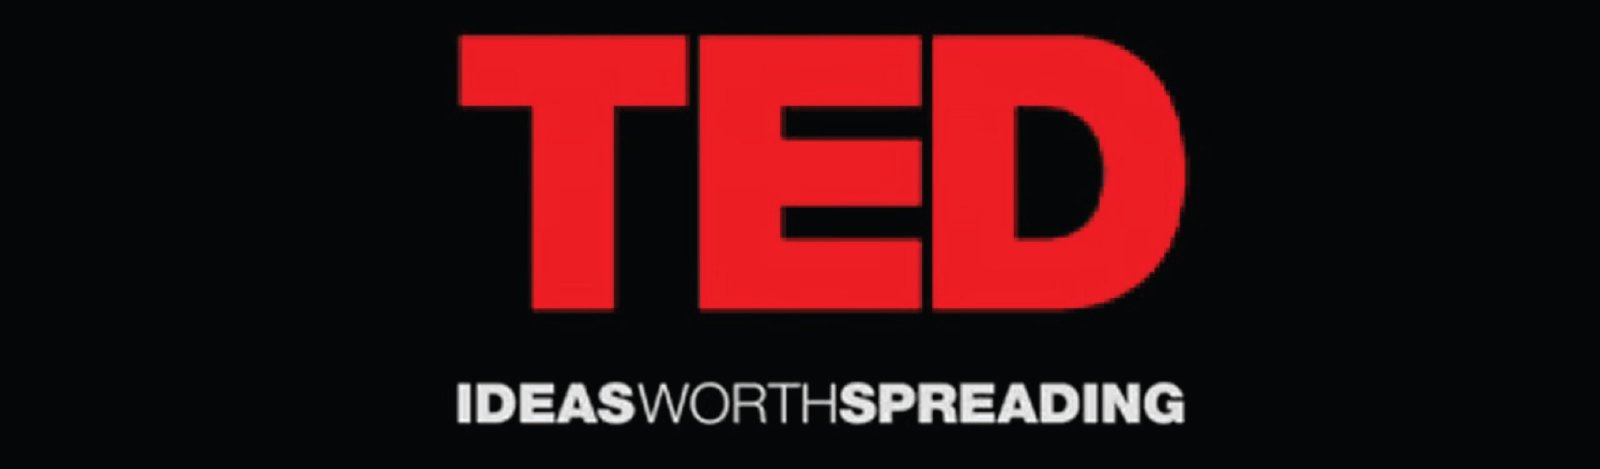 Por dentro do TED Talks - Agência io!